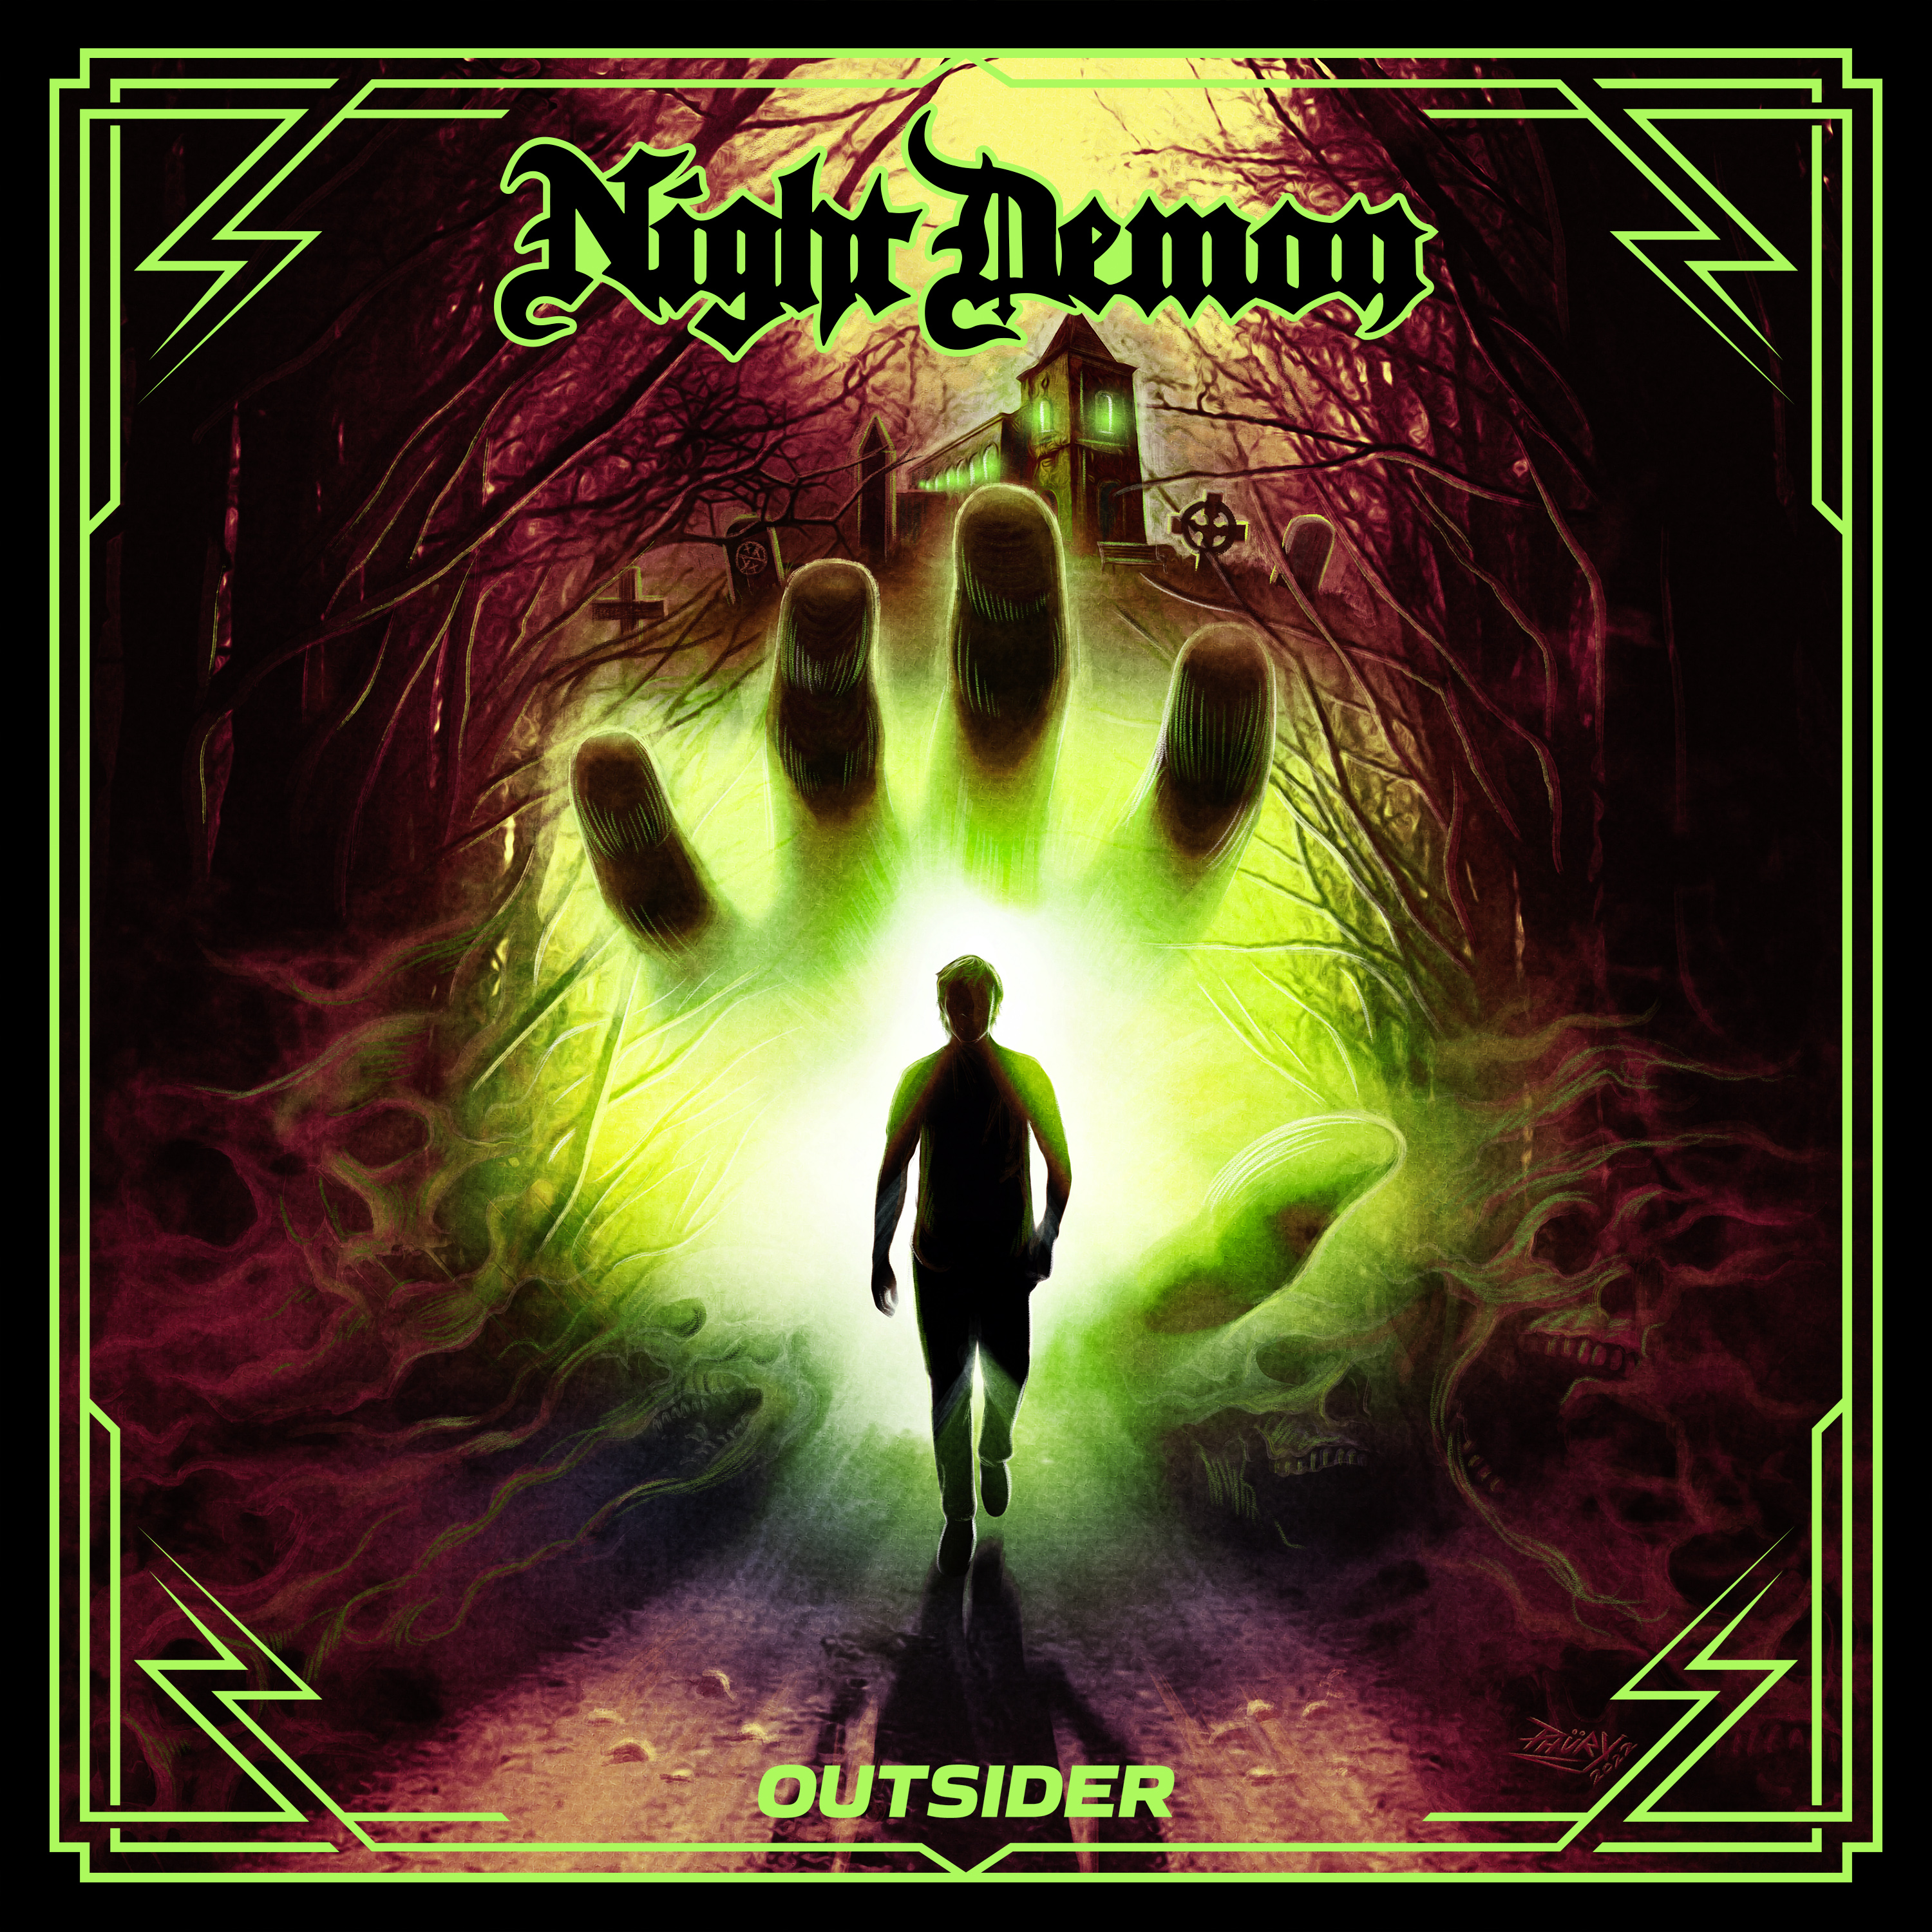 Night Demon – “Outsider” Album Review